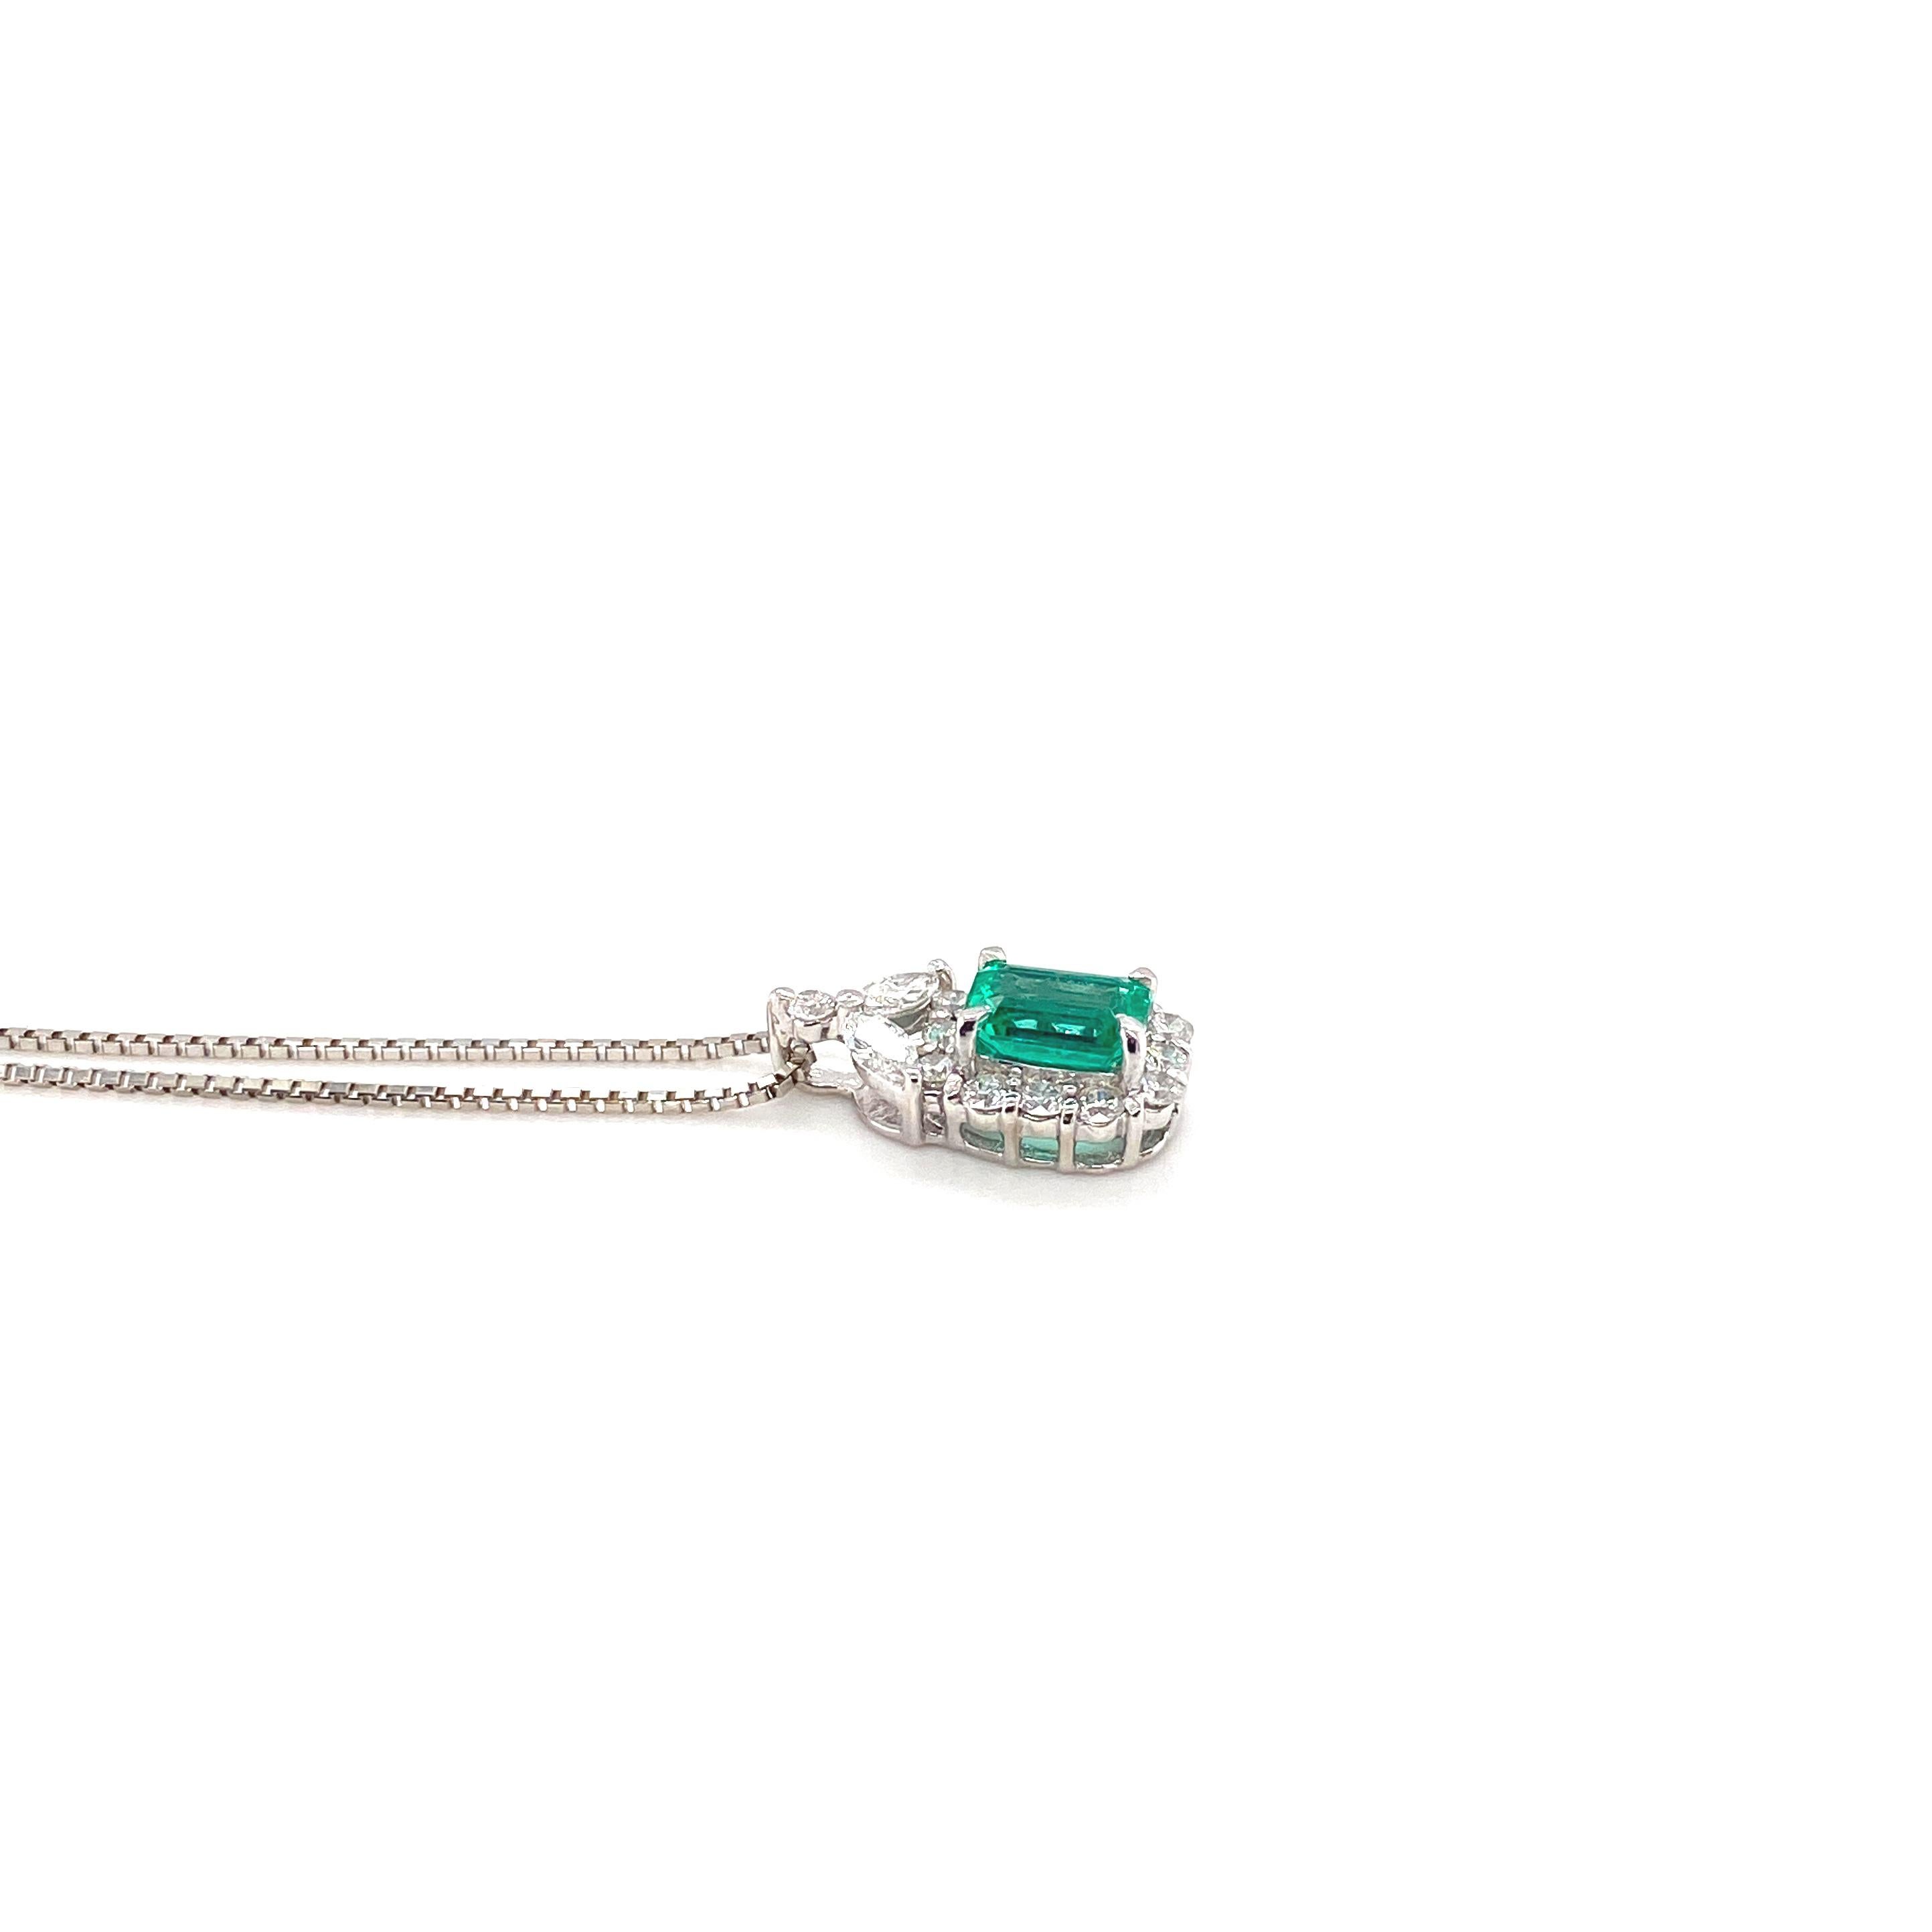 Emerald Cut CGL Certified 0.64 Carat Untreated Emerald and Diamond Pendant Set in Platinum